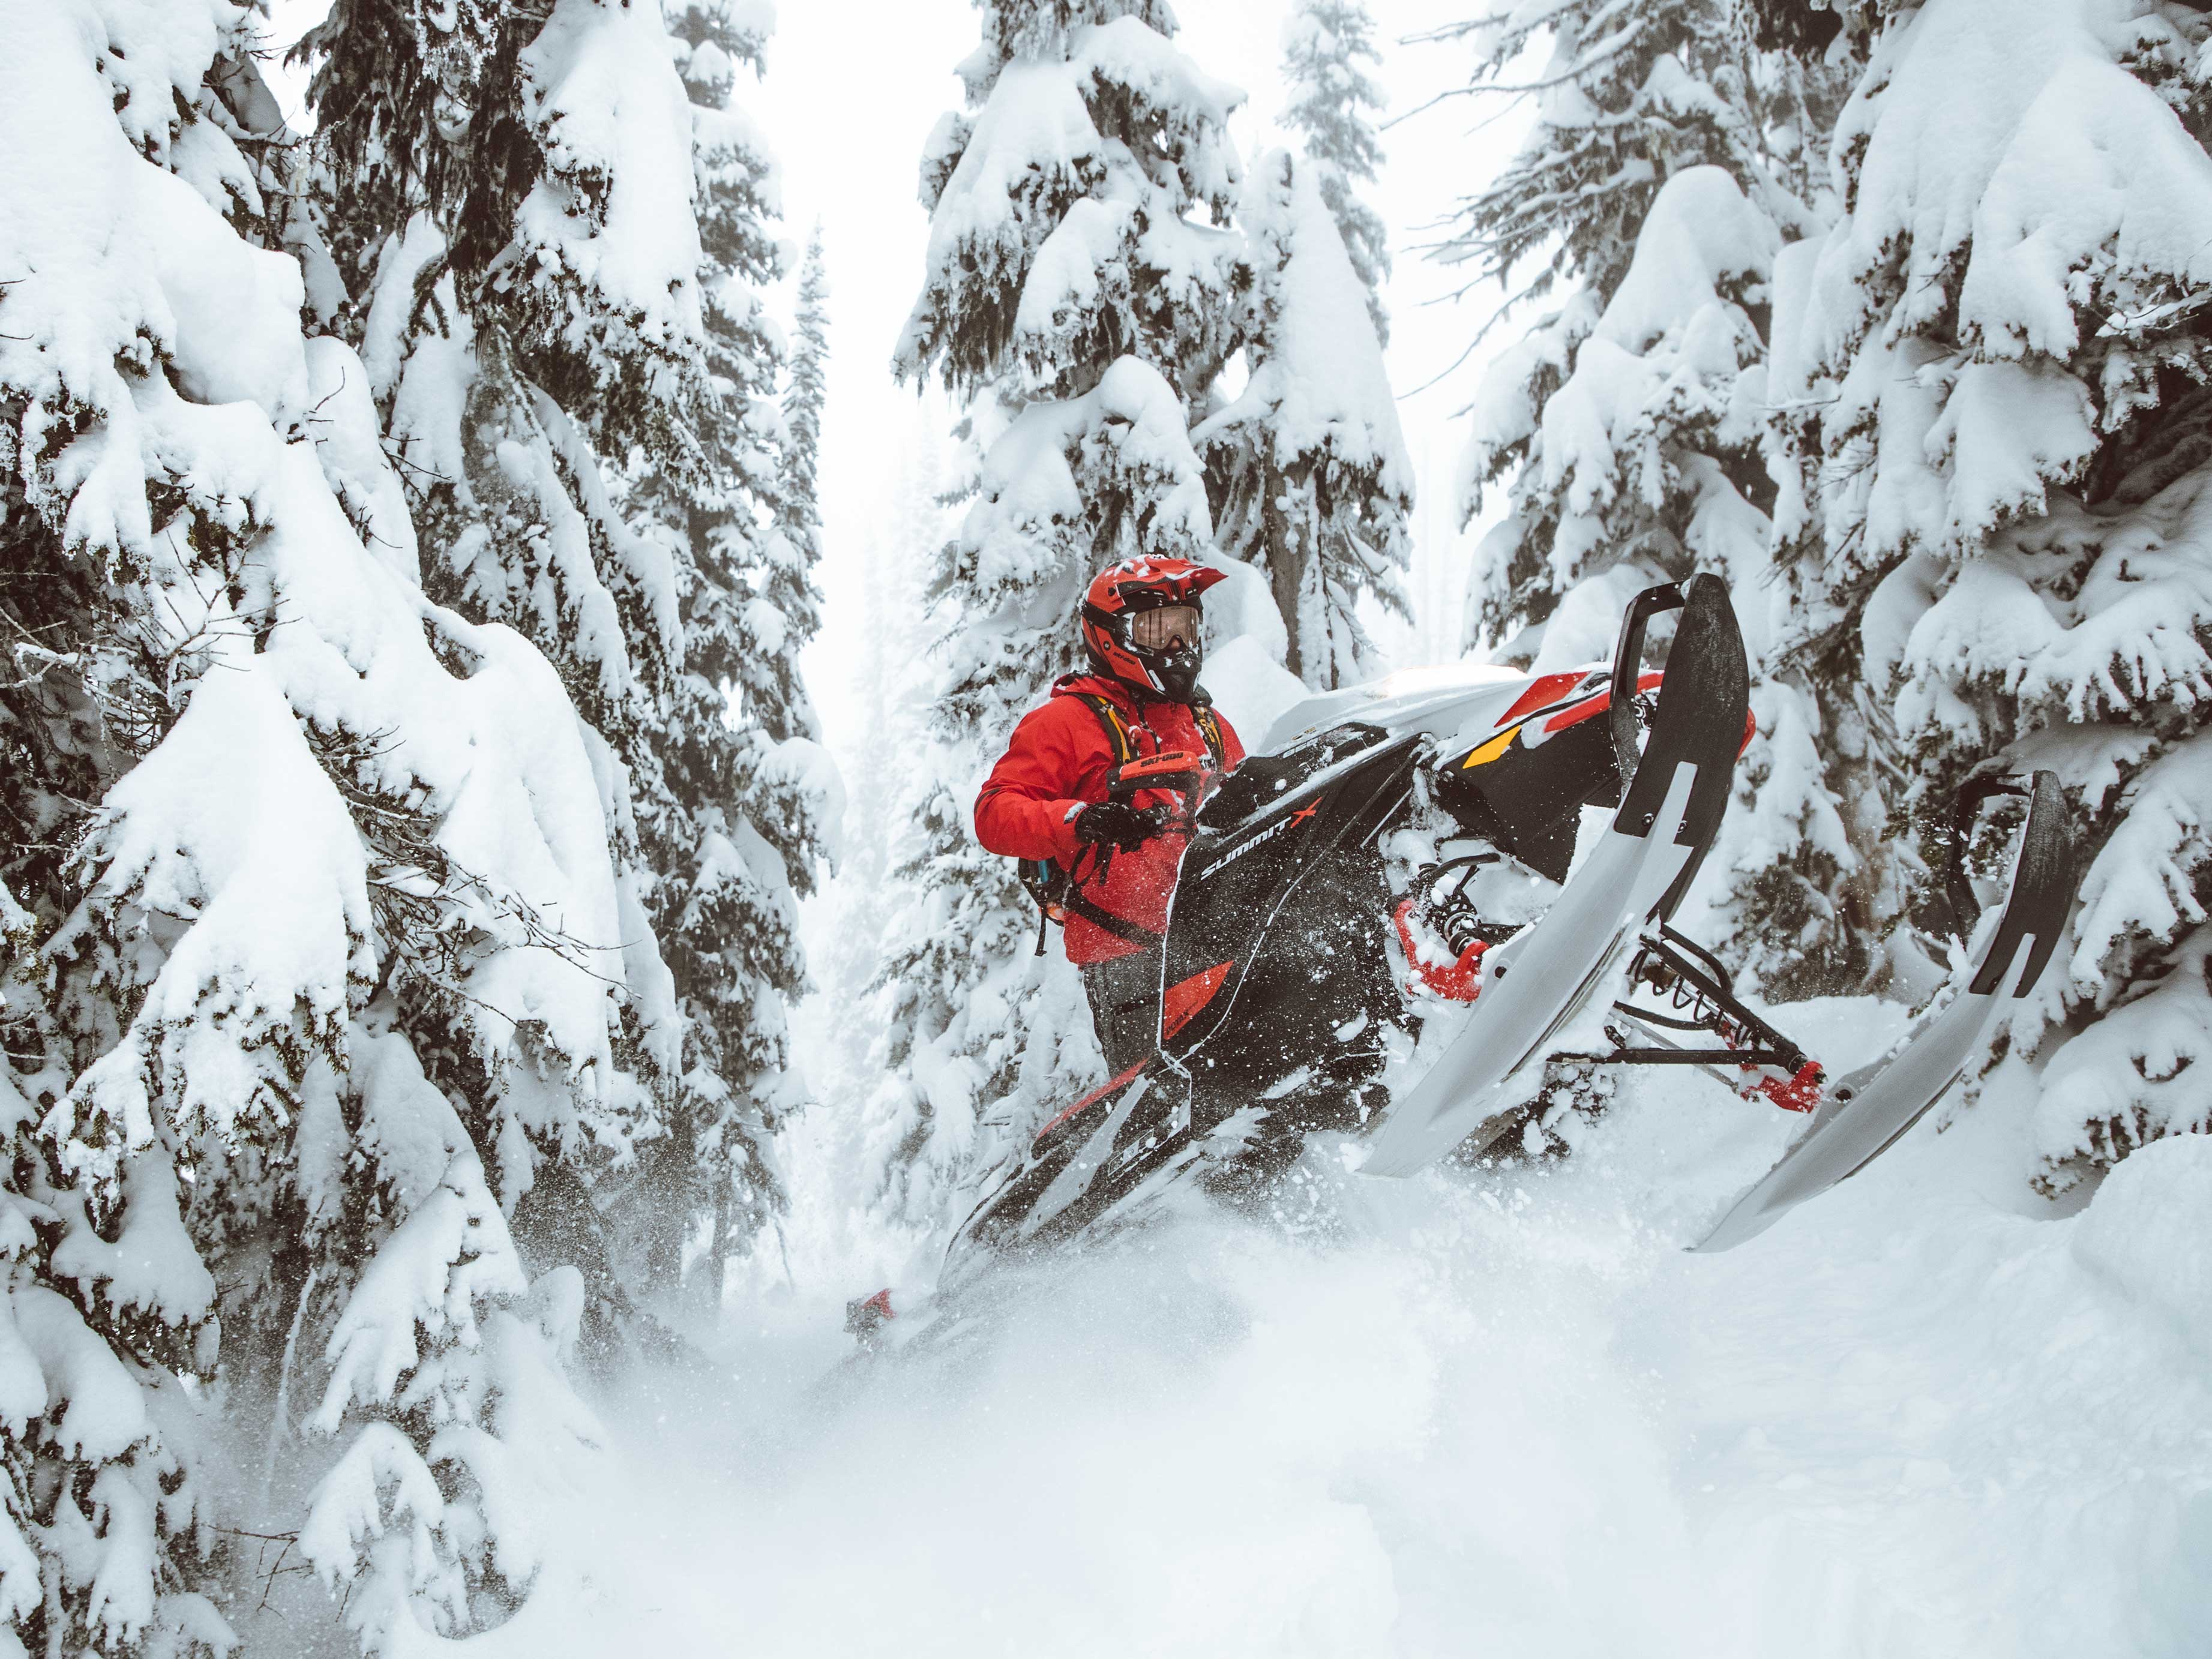 Tony Jenkins riding snowmobile in Deep-Snow